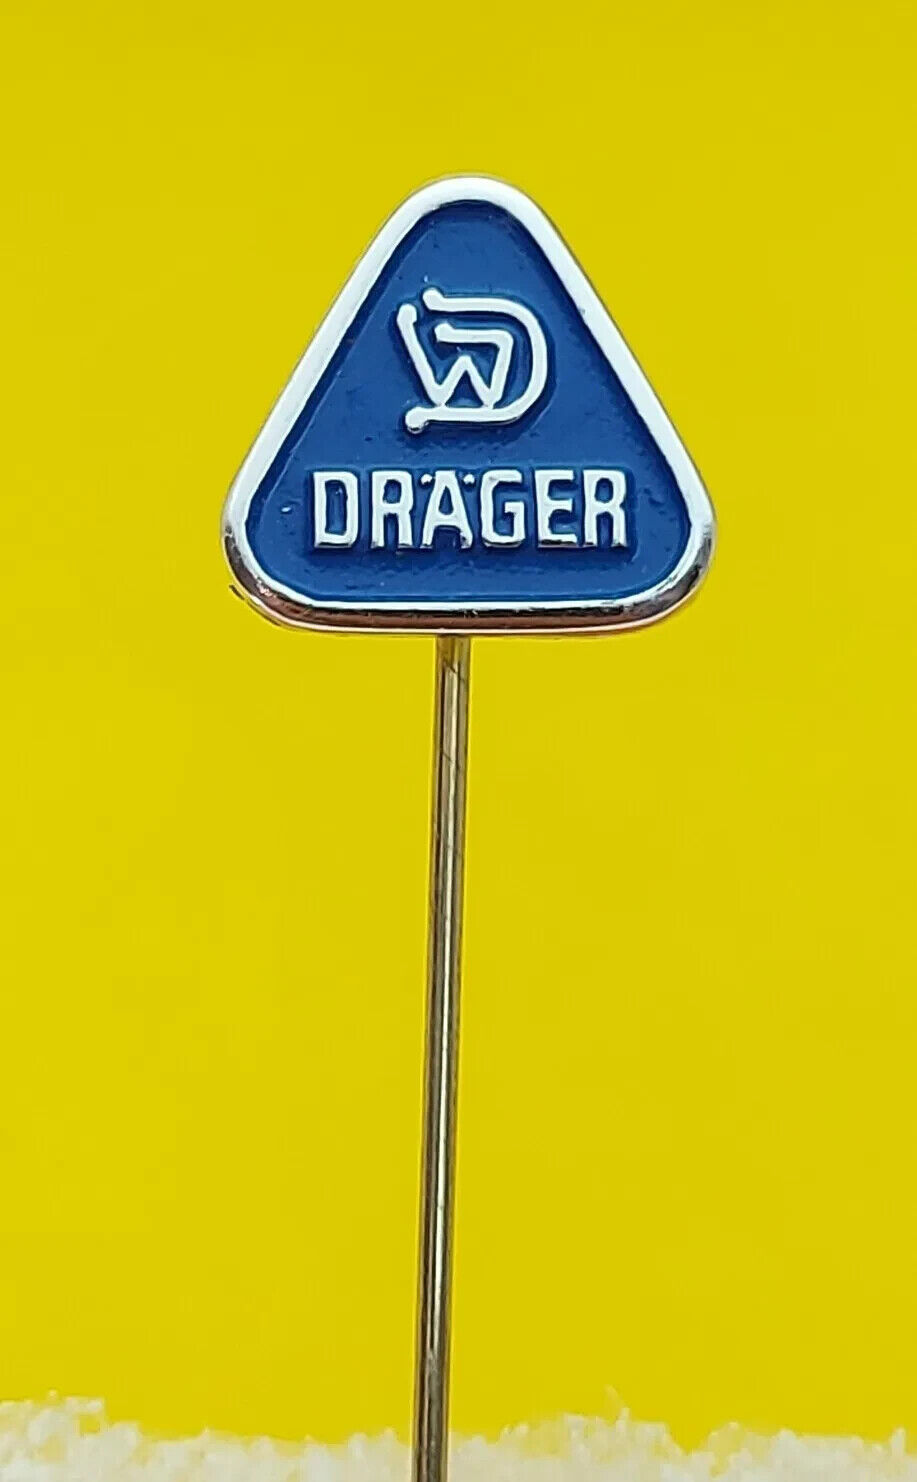 DRAGER Germany - mask masken, vintage pin, badge, abzeichen